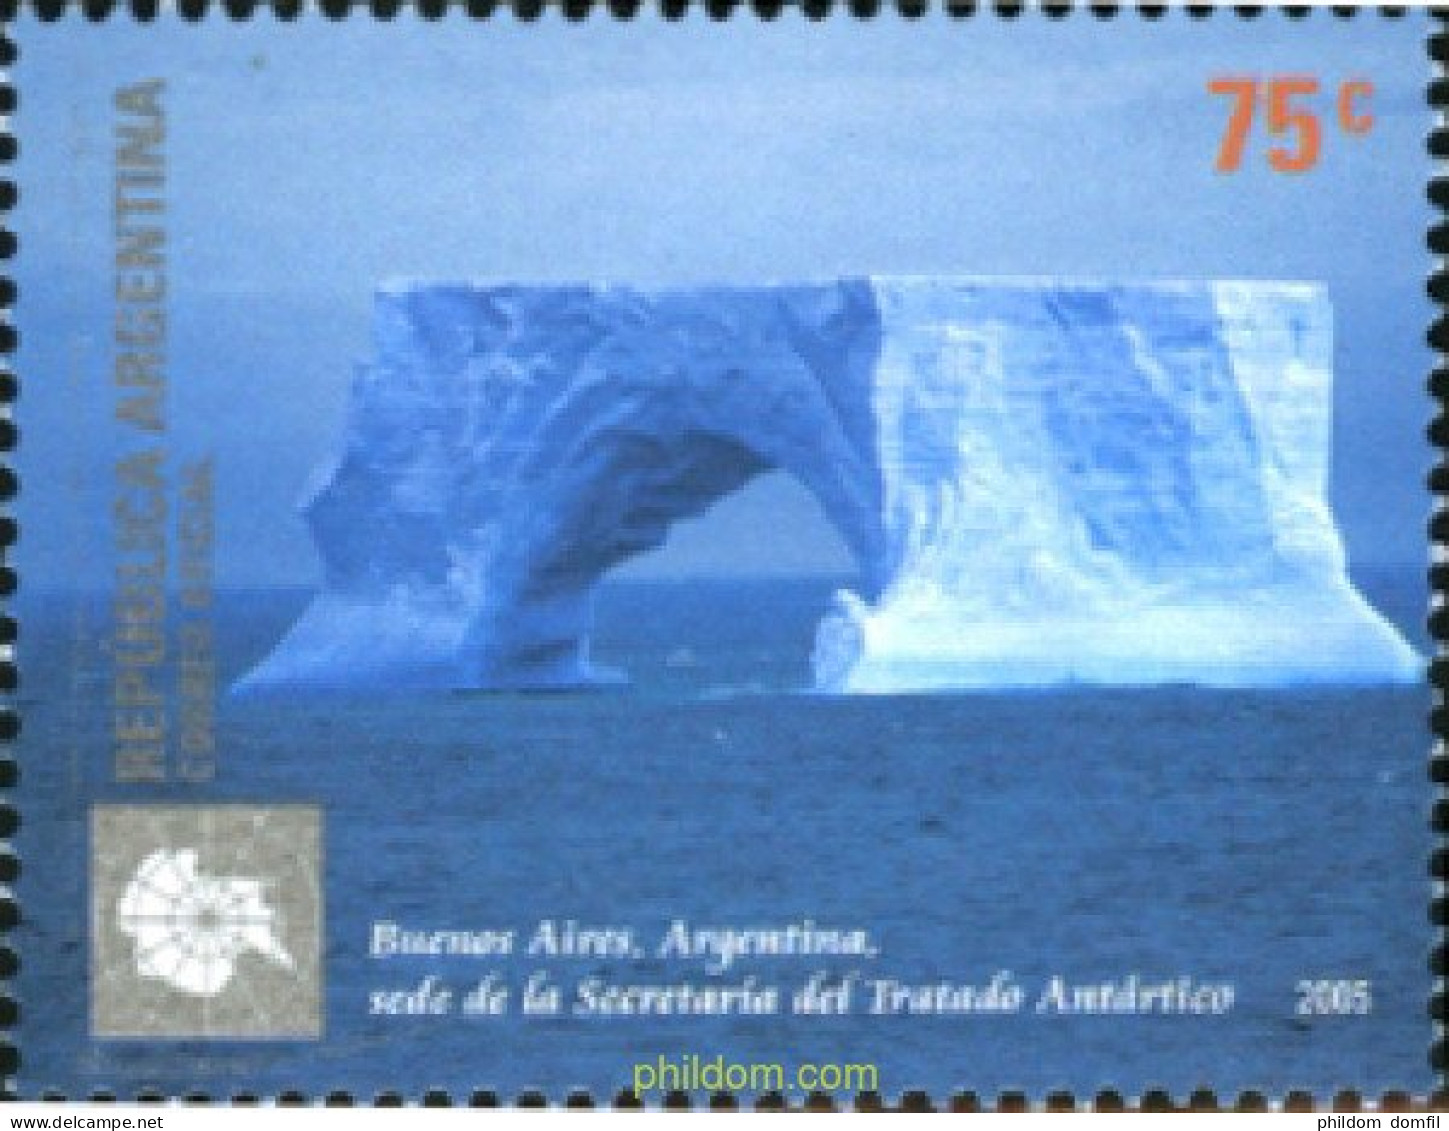 186339 MNH ARGENTINA 2005 ANTARTIDA ARGENTINA - Nuovi